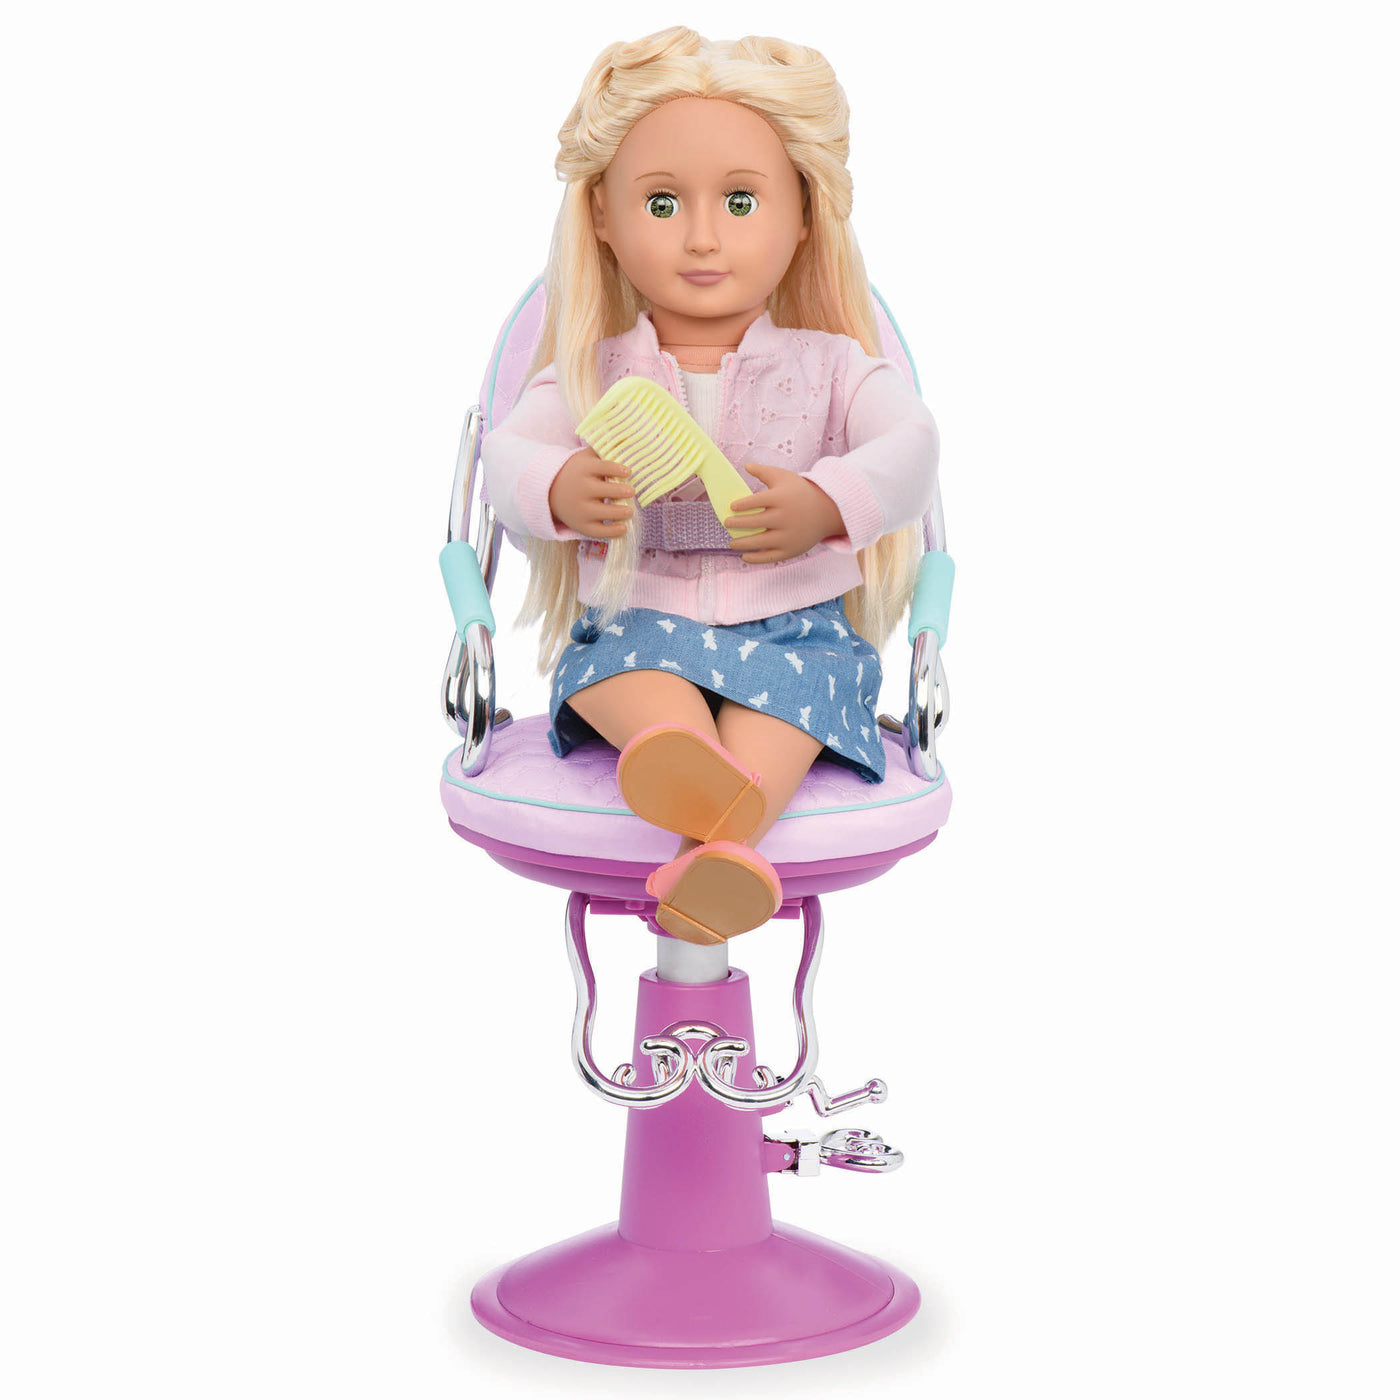 Lilac salon chair playset